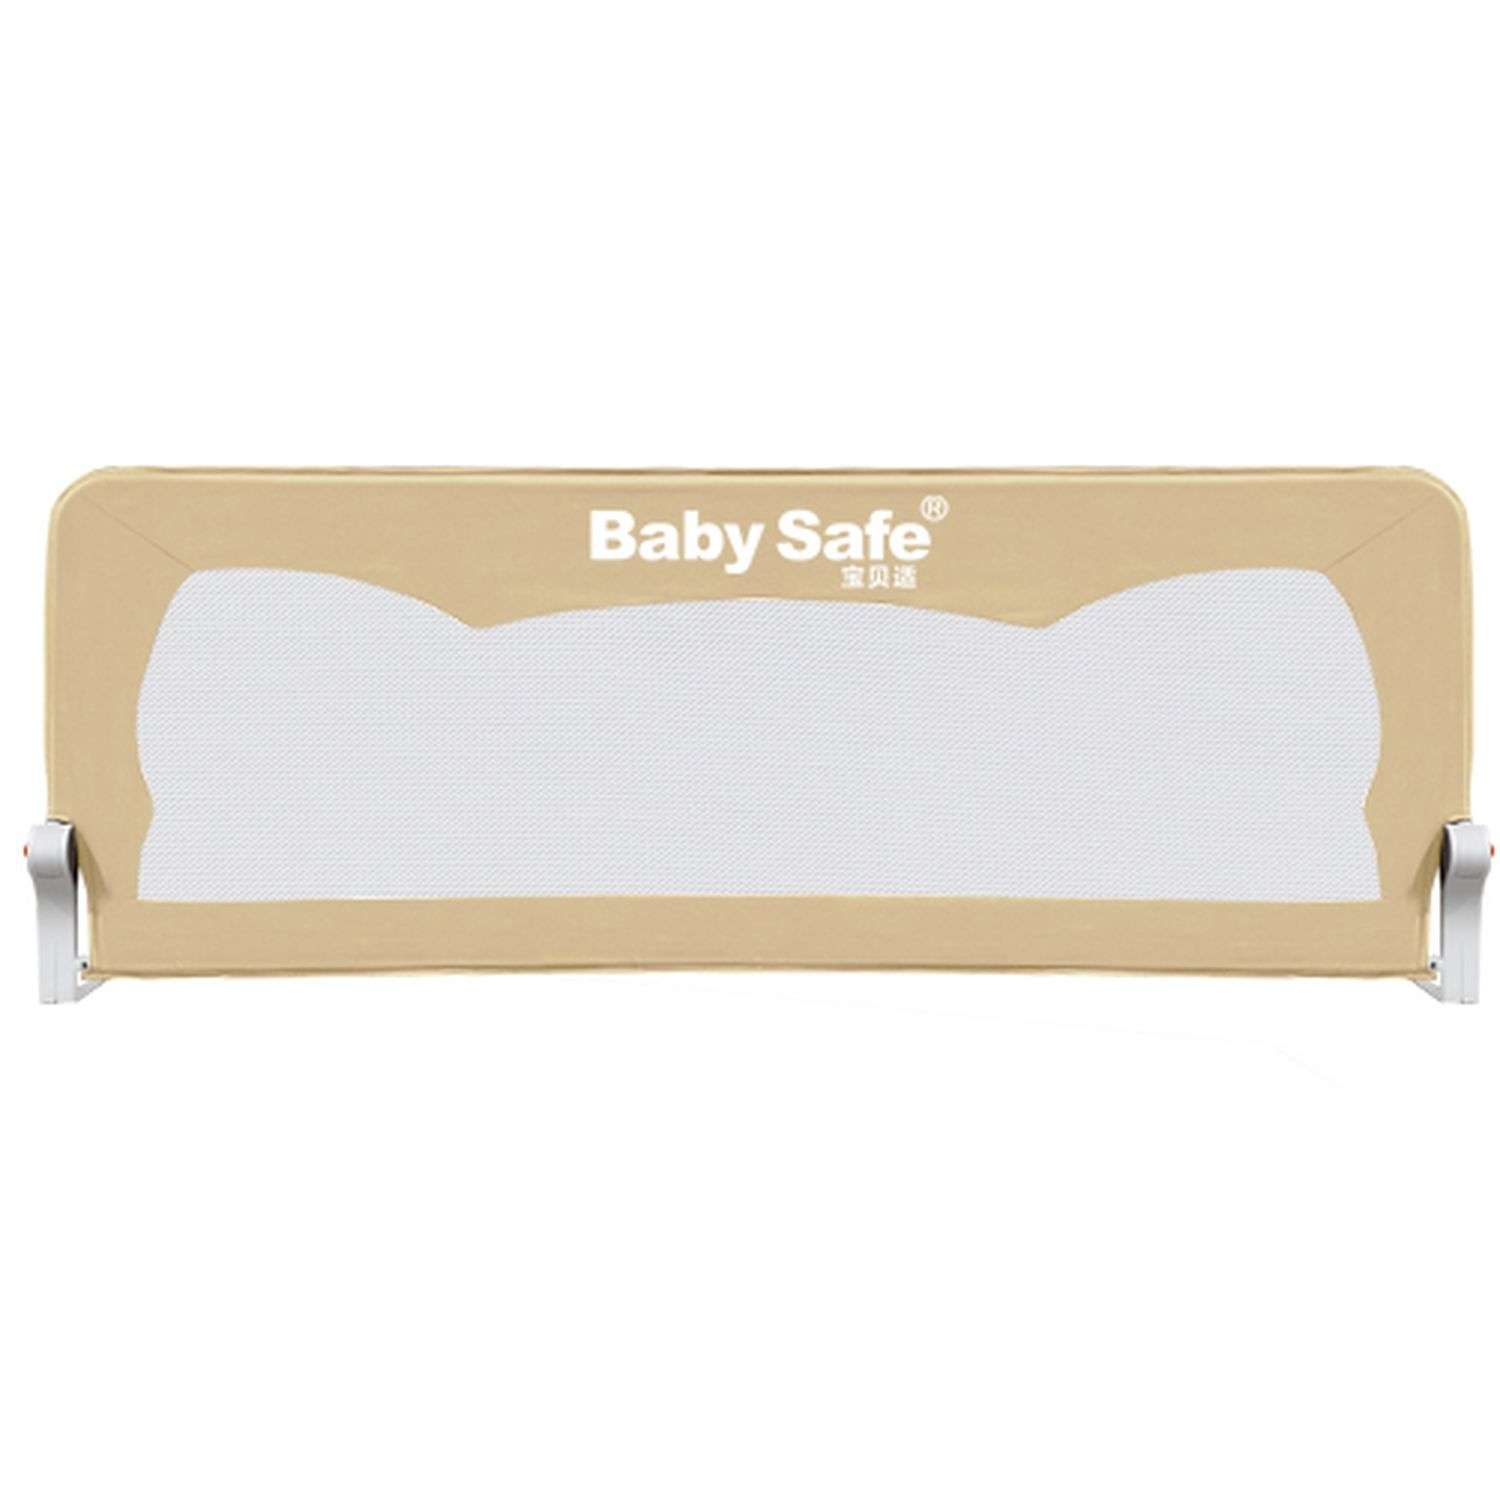 Барьер защитный для кровати Baby Safe защитный для кровати Ушки 180х42 бежевый - фото 2